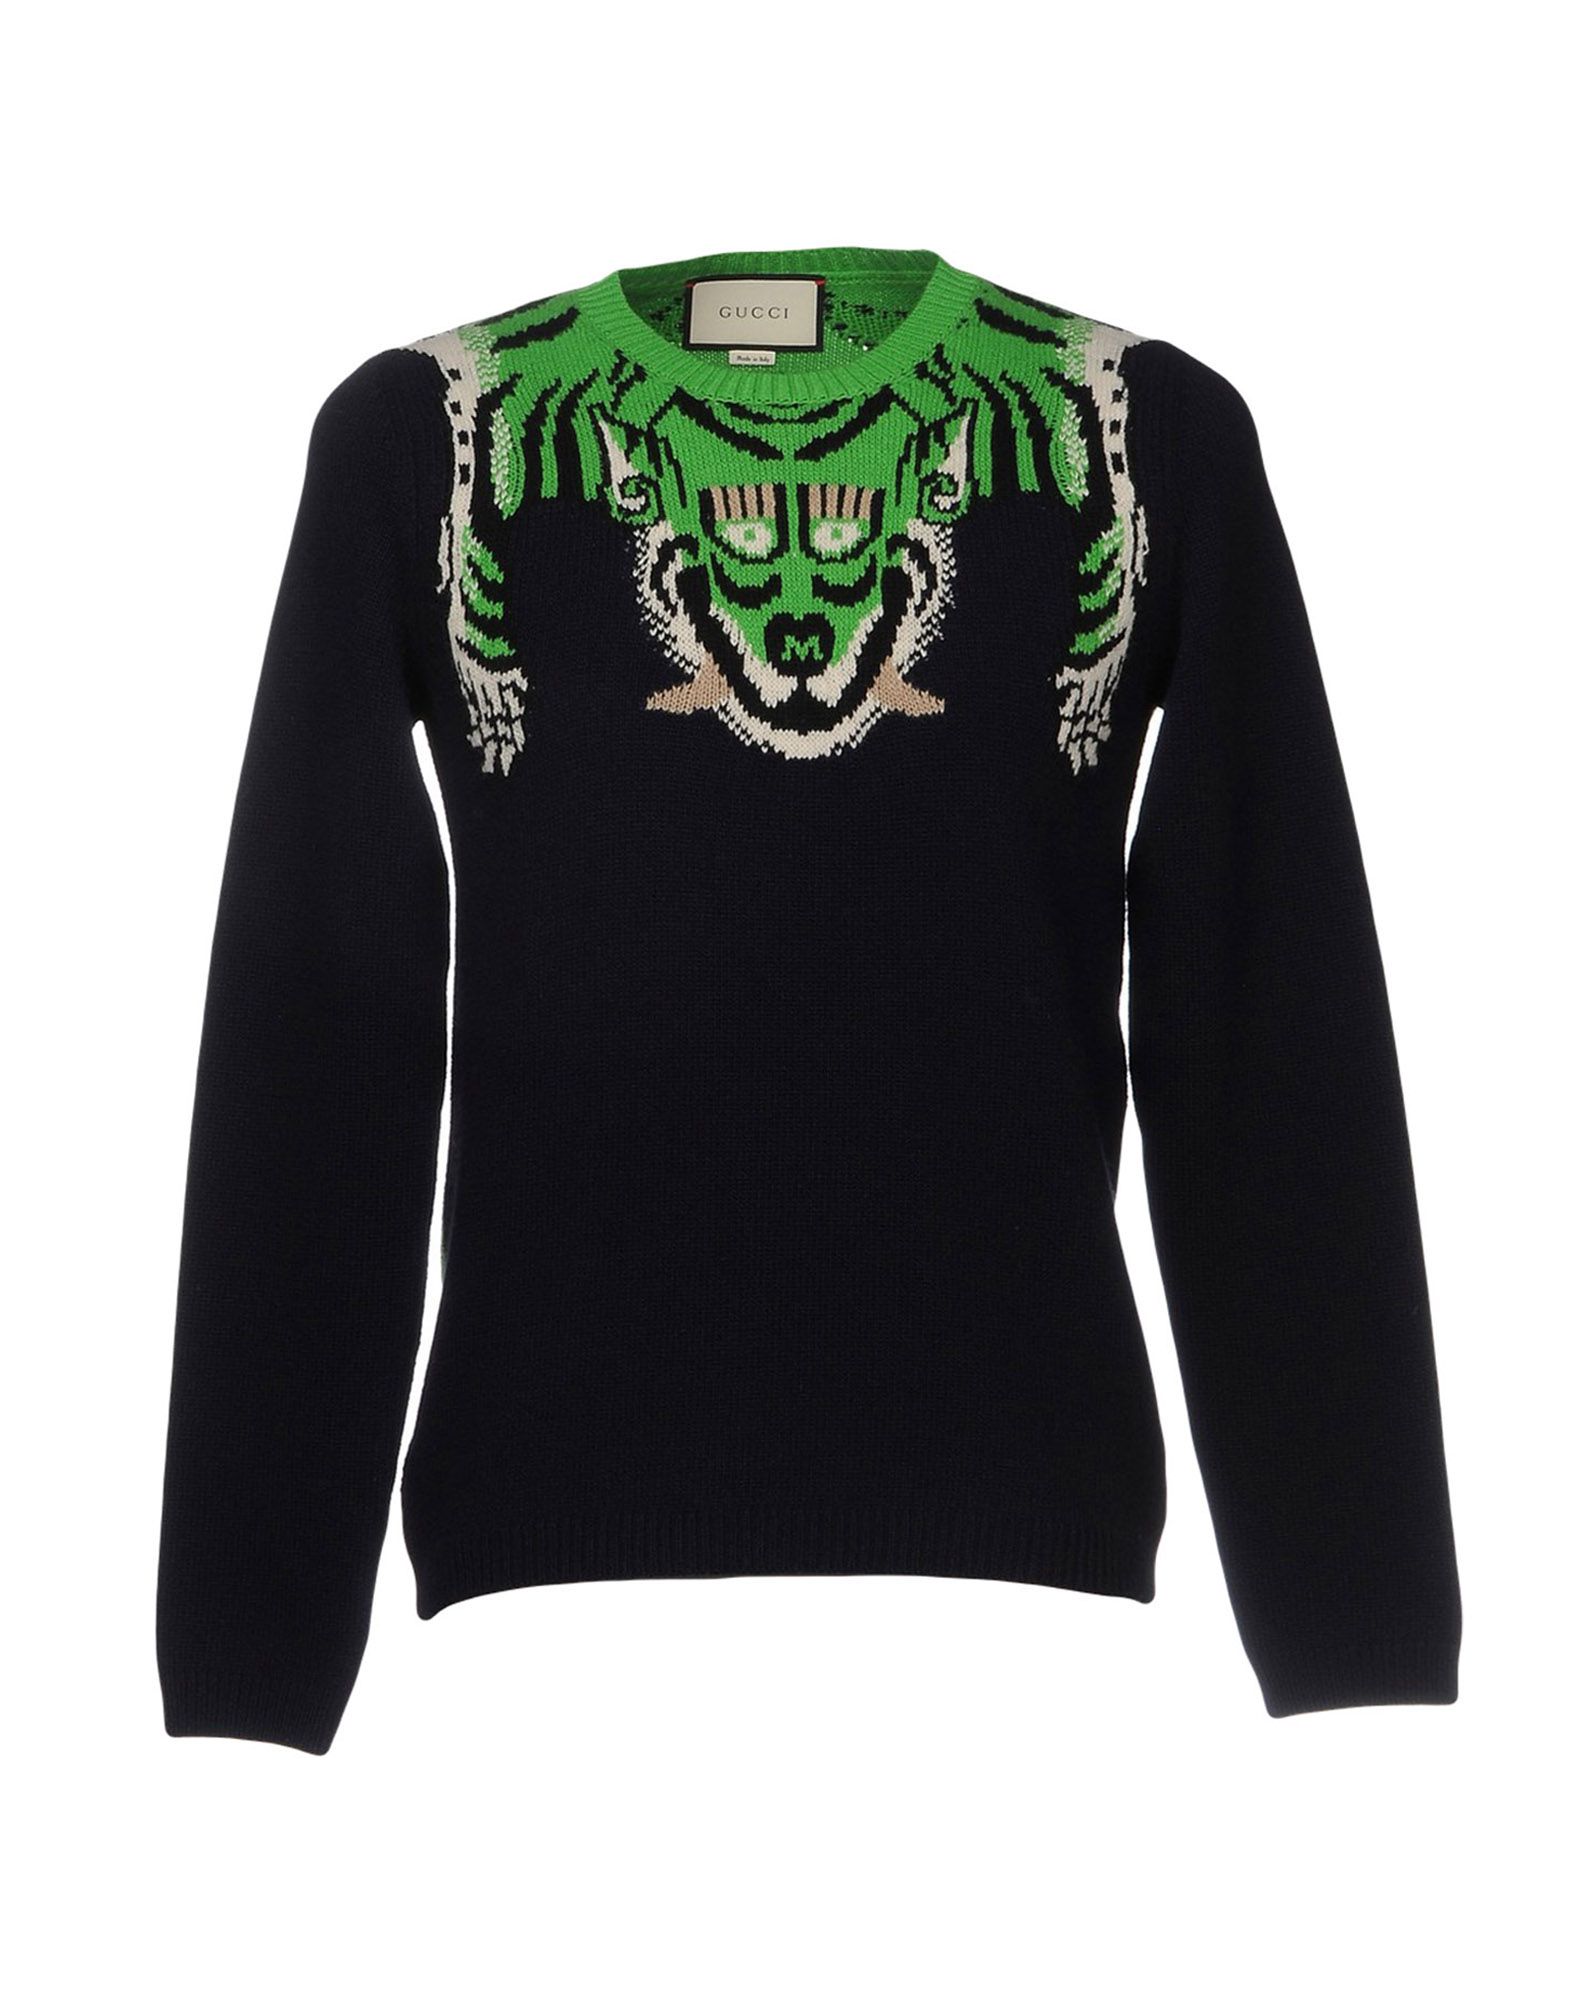 Gucci Knit Tiger-Stripe Sweater, Green | ModeSens